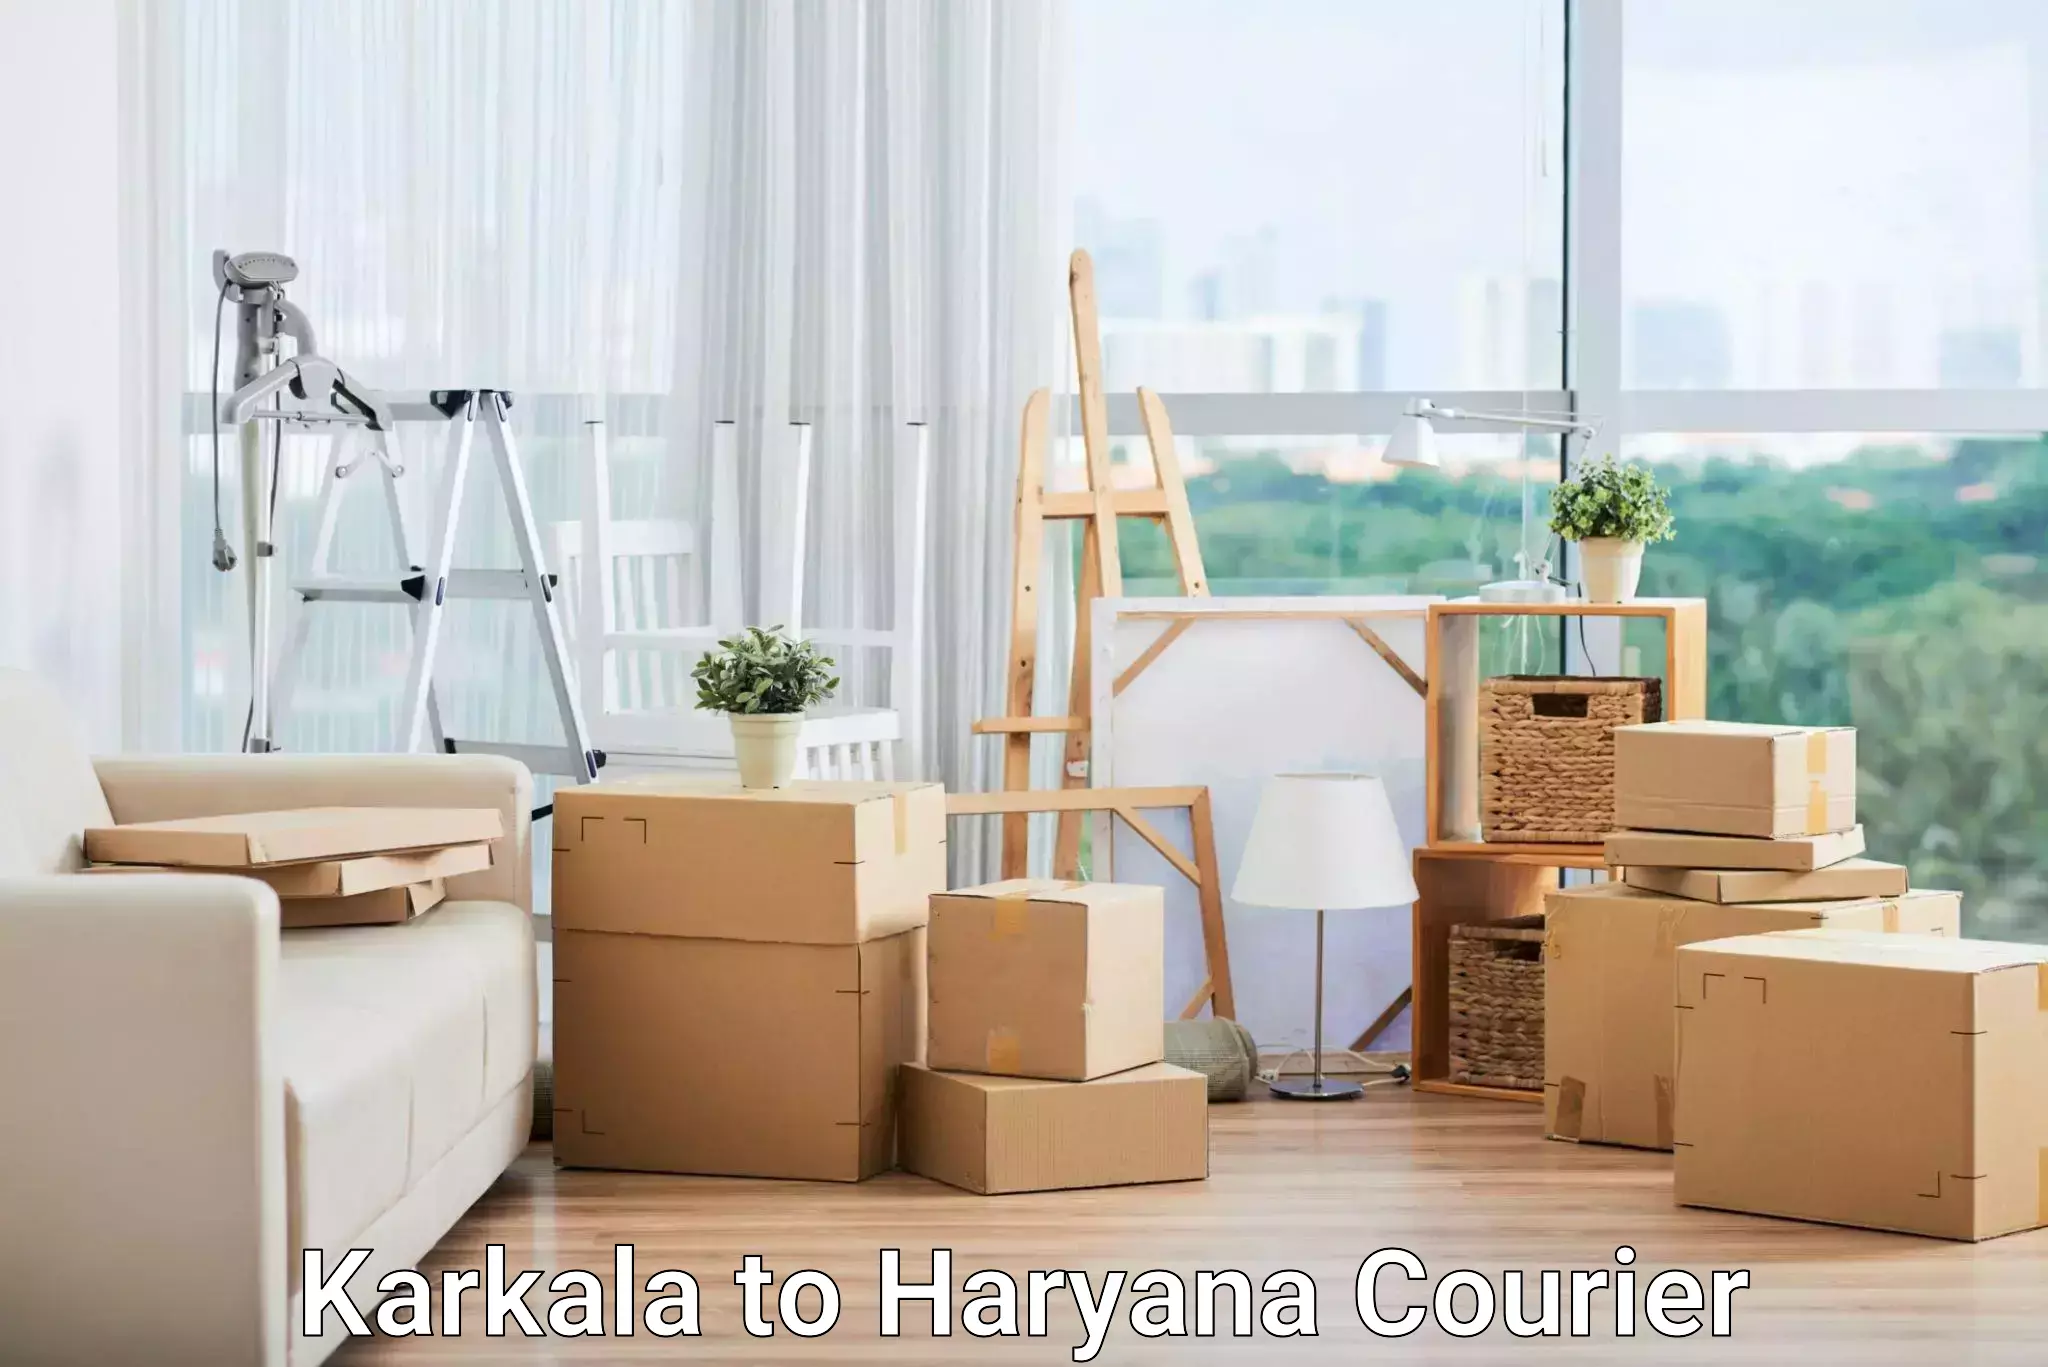 Courier service innovation Karkala to Hansi